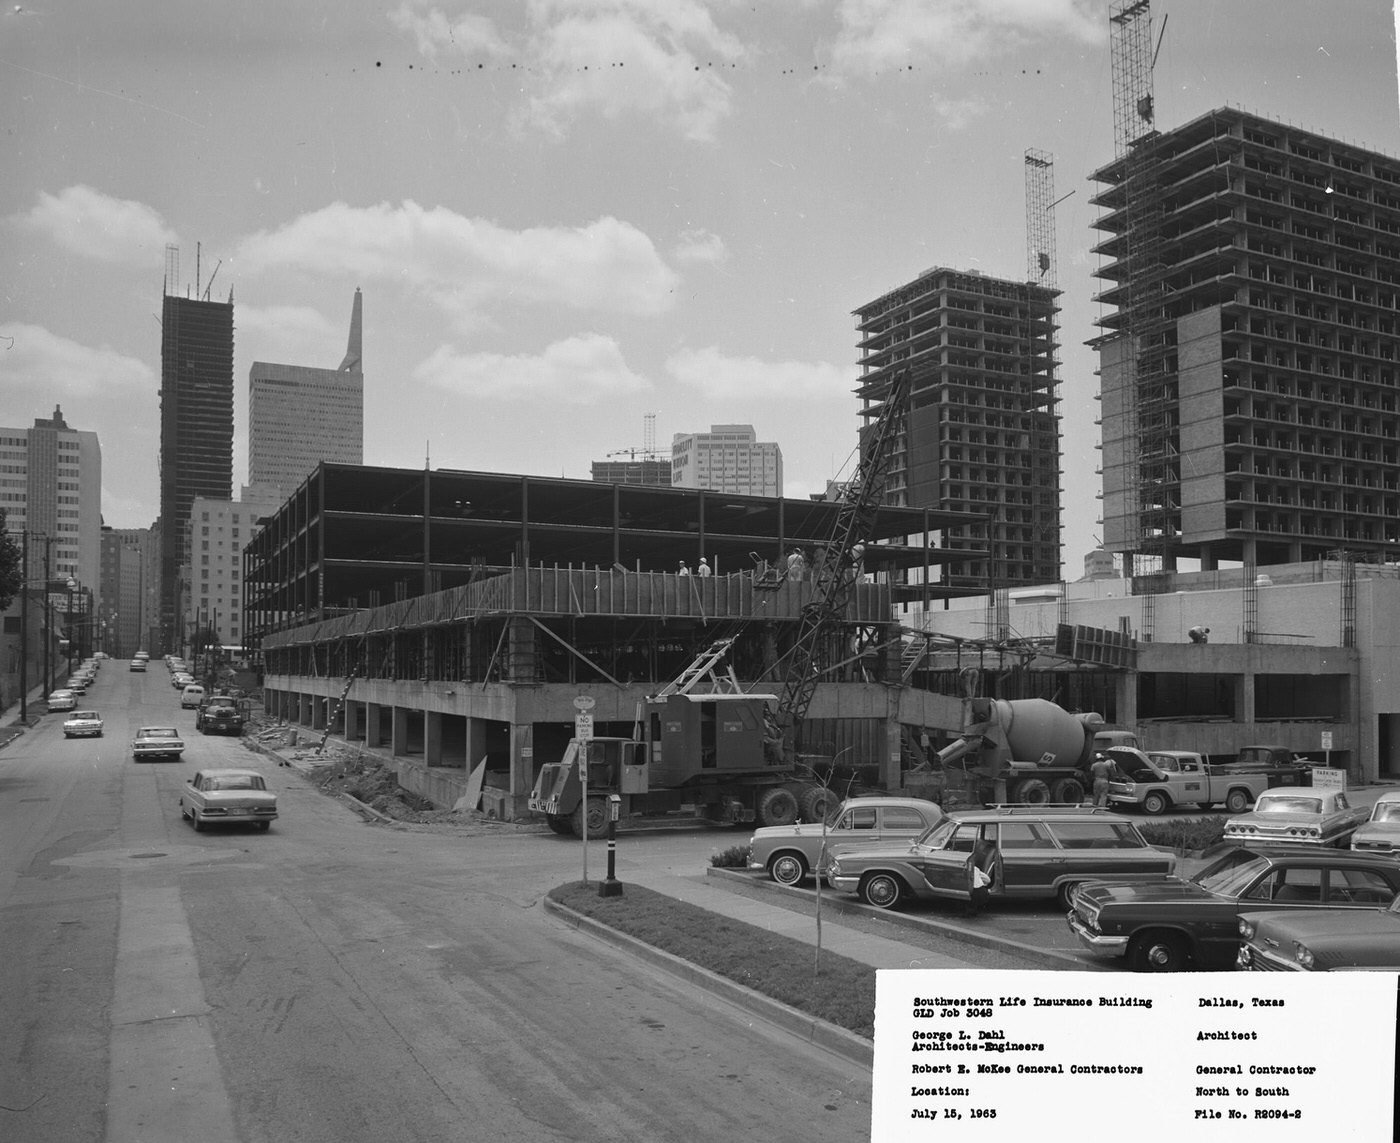 Southwestern Life Insurance building under construction, downtown Dallas, Texas, 1963